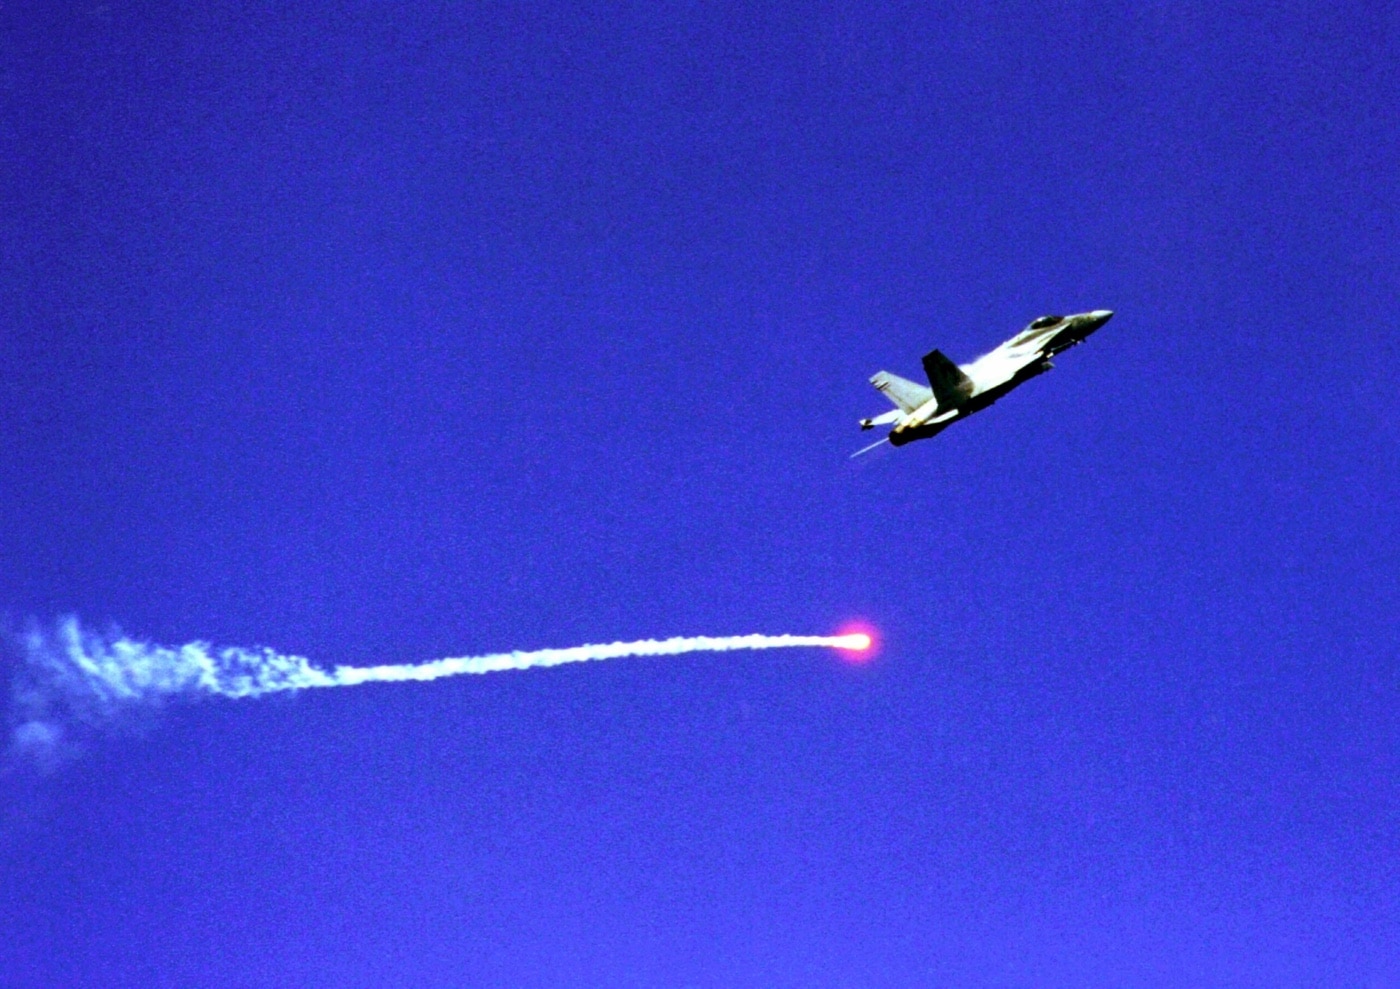 FA-18 Hornet Breaklock maneuver 1999